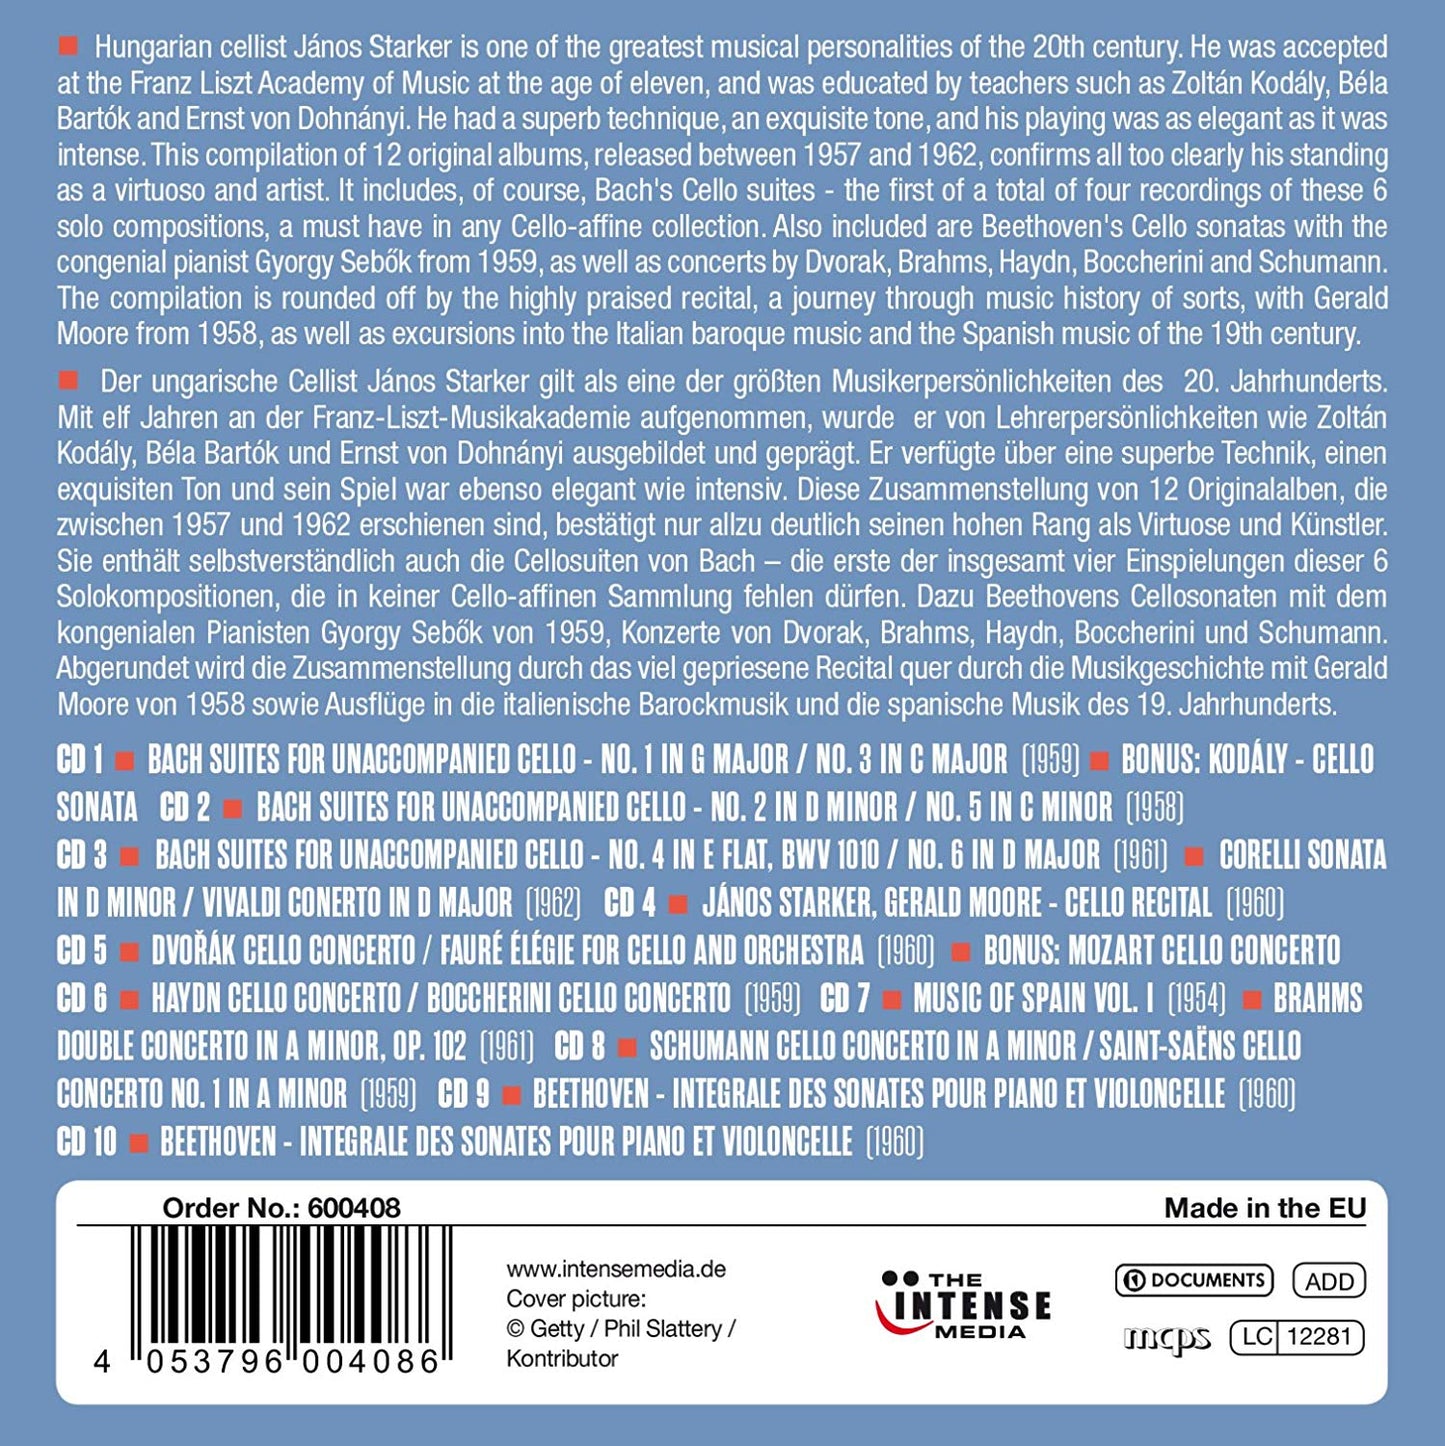 JANOS STARKER Milestones Of A Legend - 12 Original Albums (10 CDS)